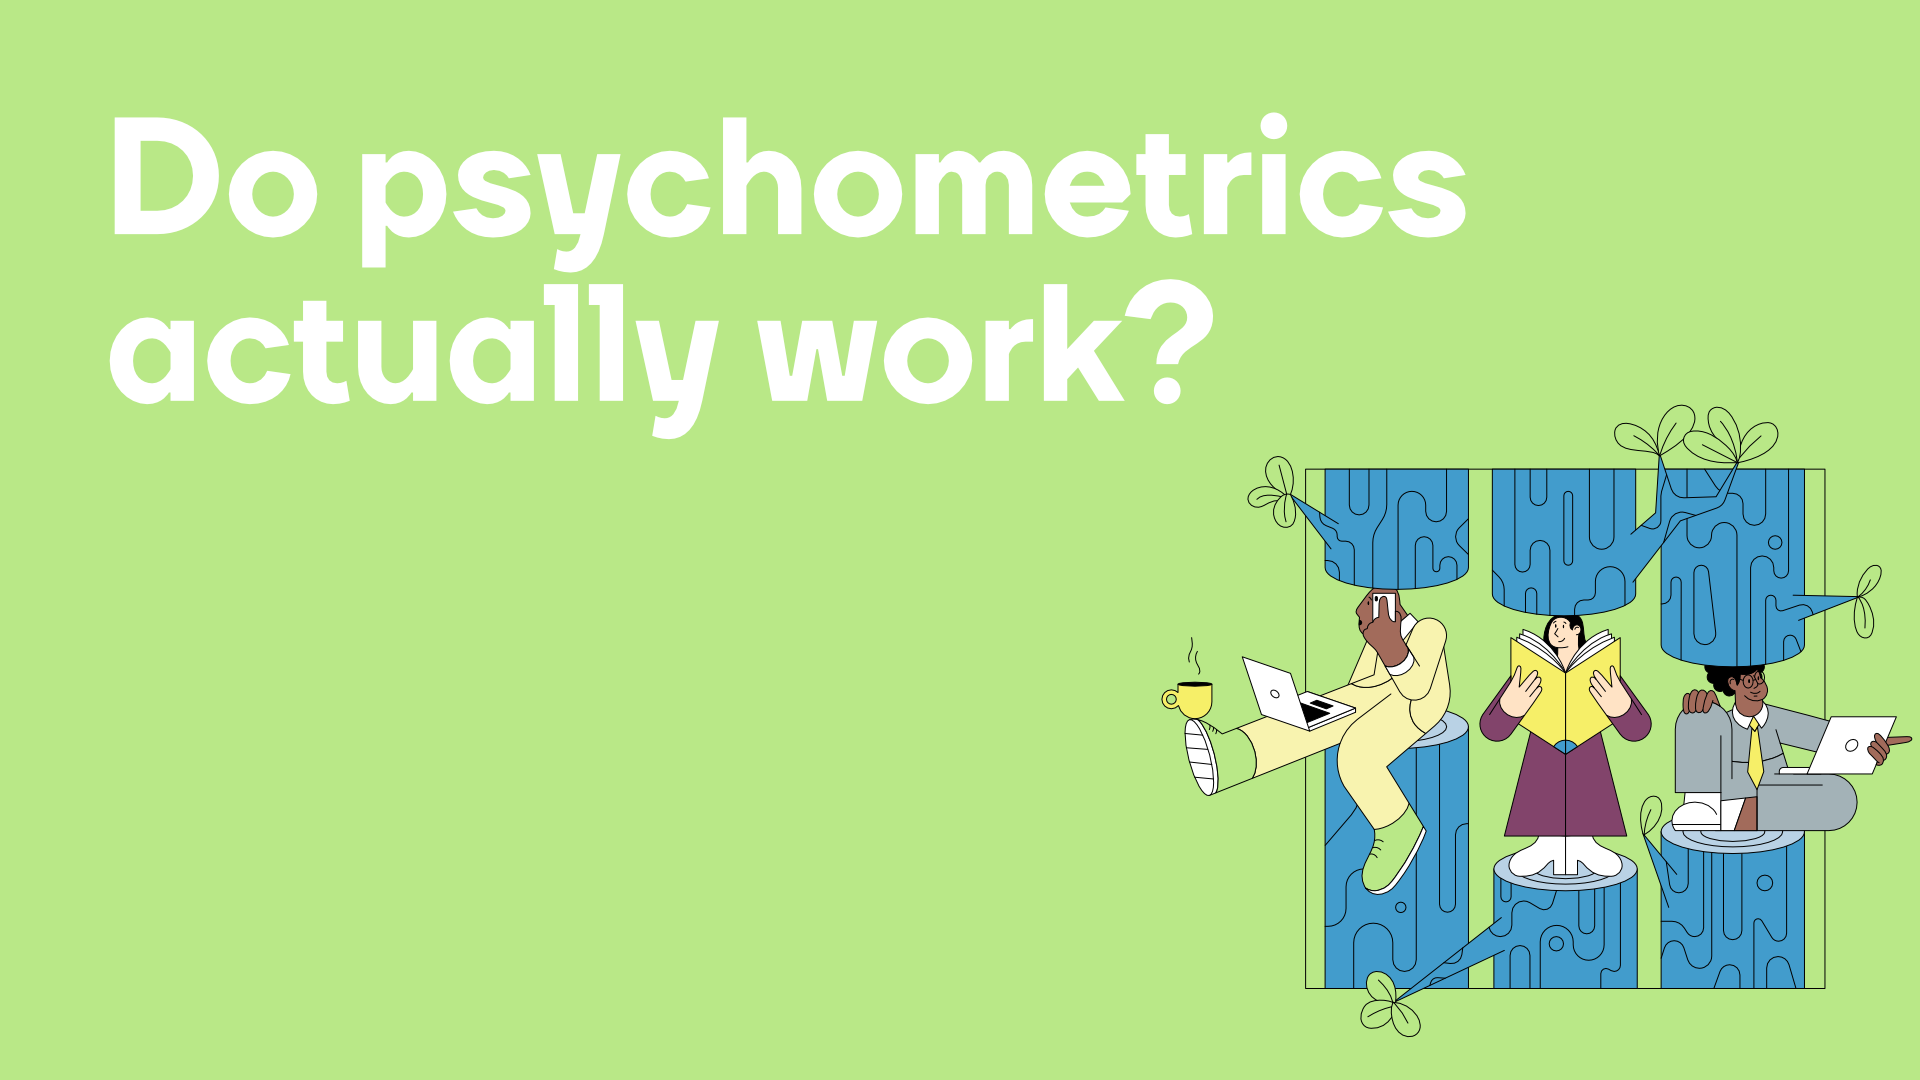 Do psychometrics actually work?